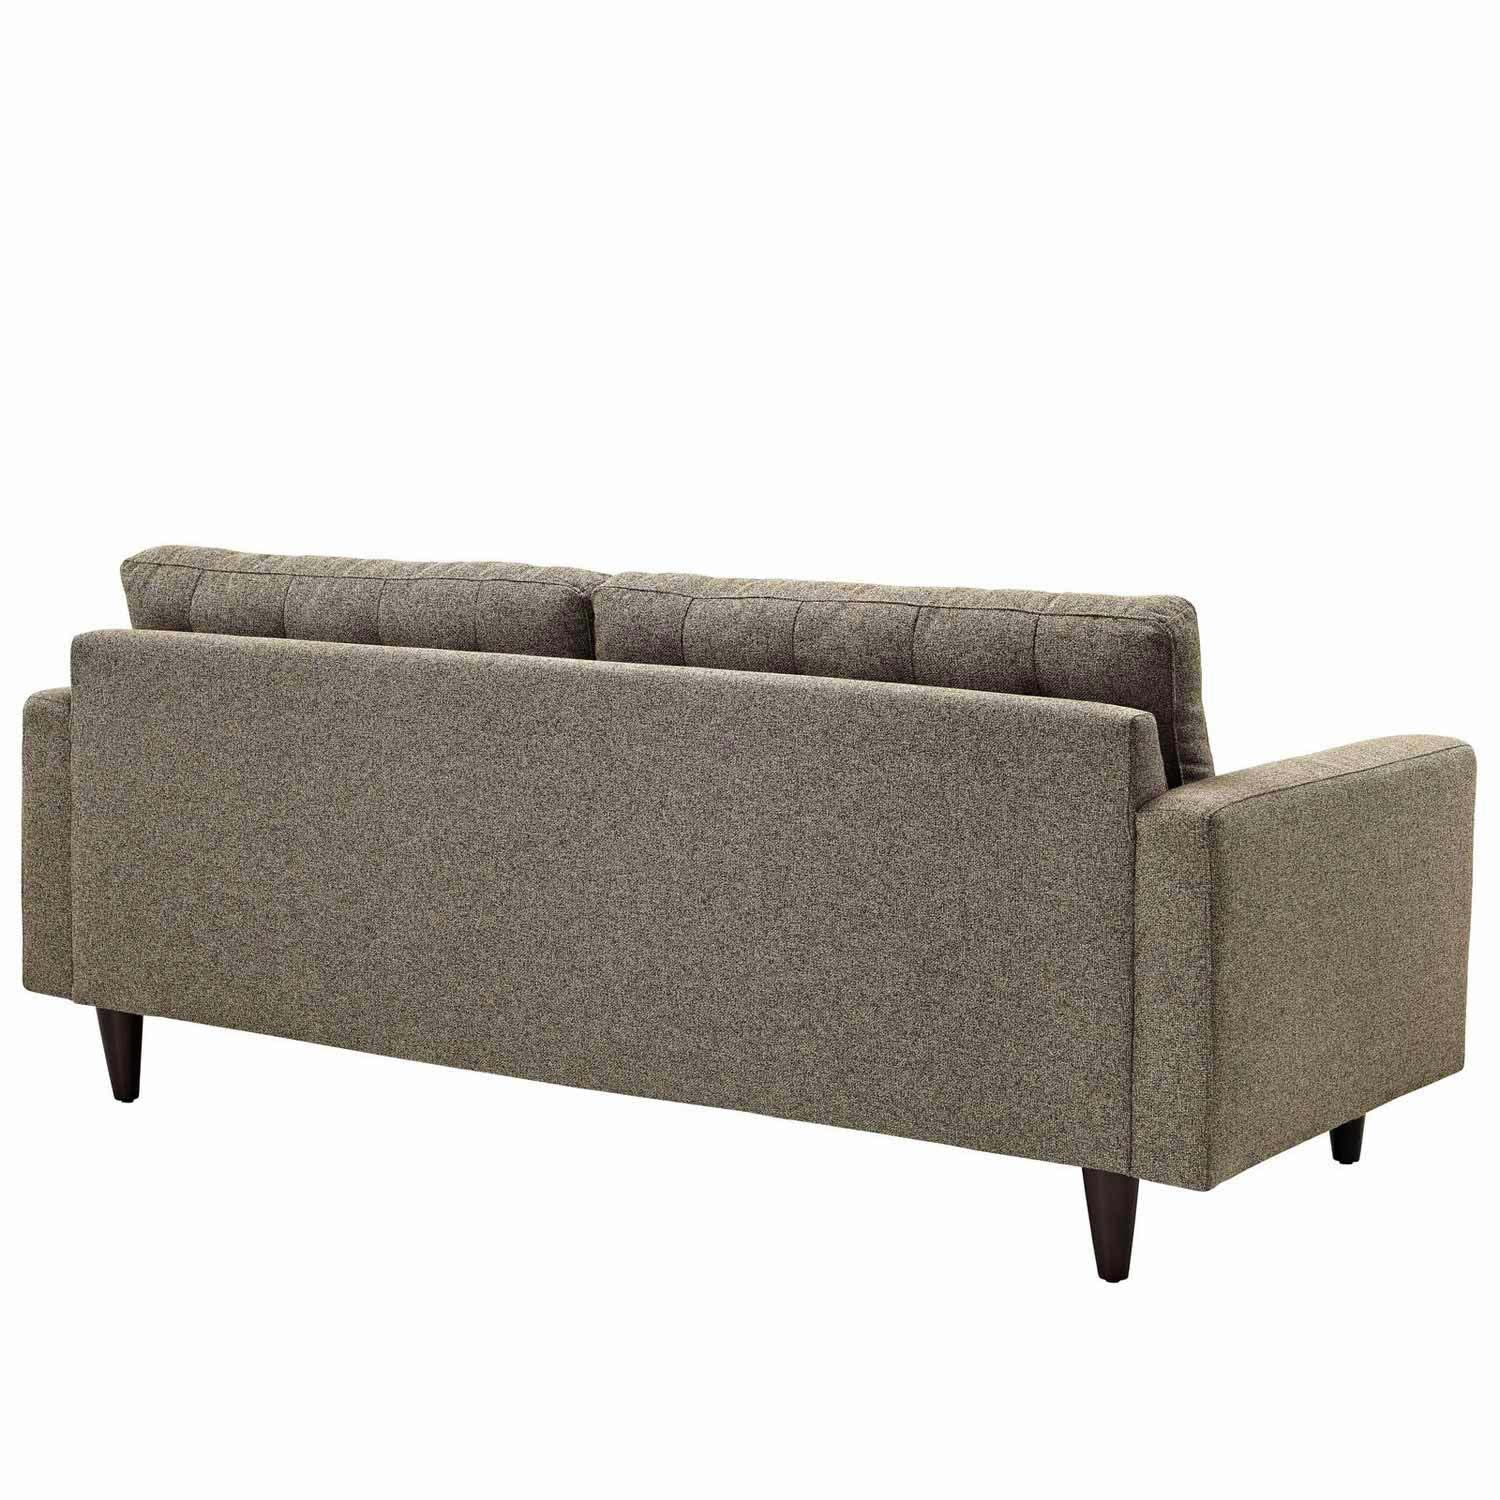 Modway Empress Upholstered Sofa - Oatmeal